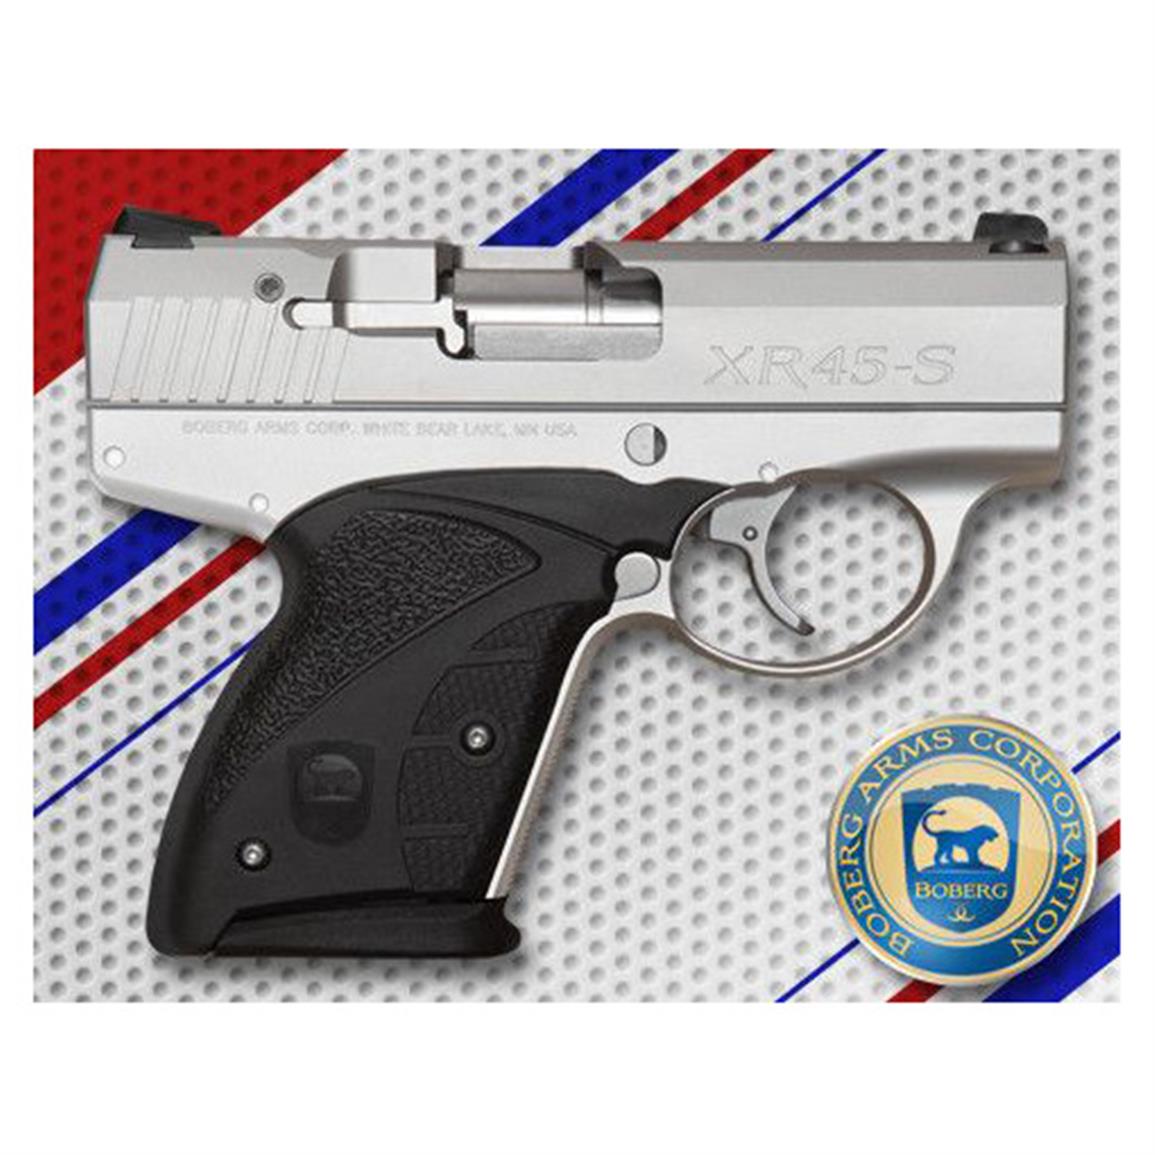 Boberg Arms XR45-S Platinum, Semi-automatic, .45 ACP, 1X45SPLT1, 811609021026, 3.75